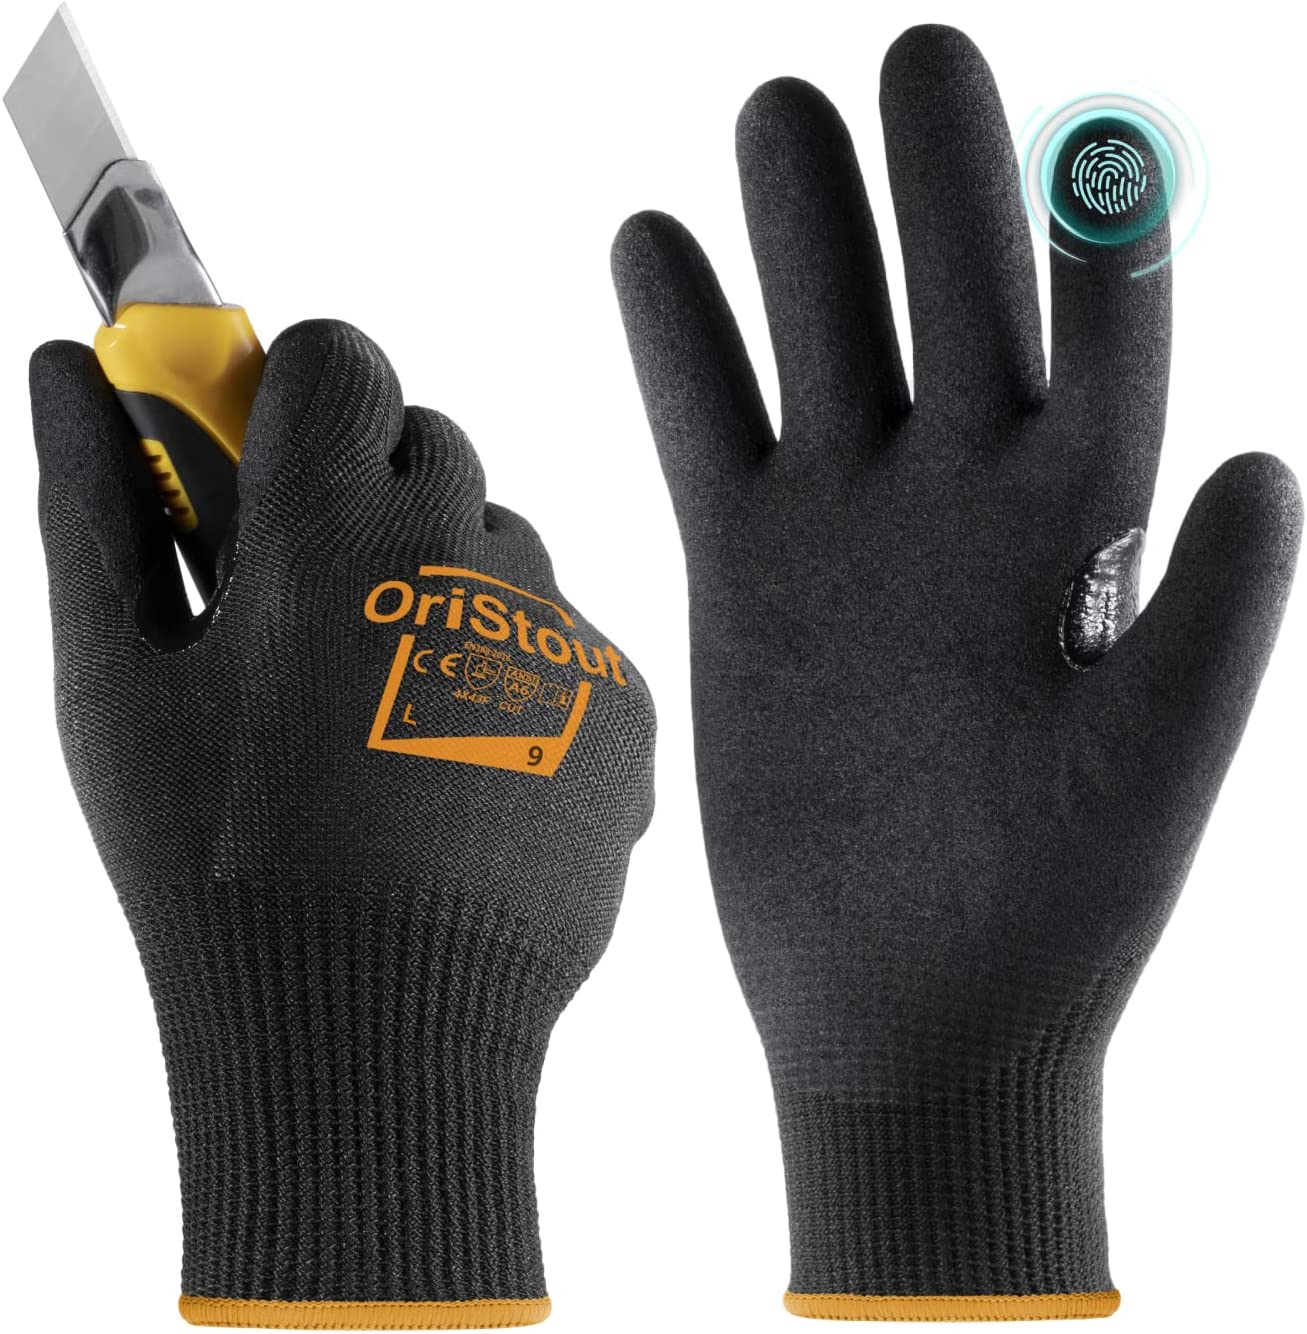 A6 Cut Resistant Gloves Nitrile Coated Work Gloves